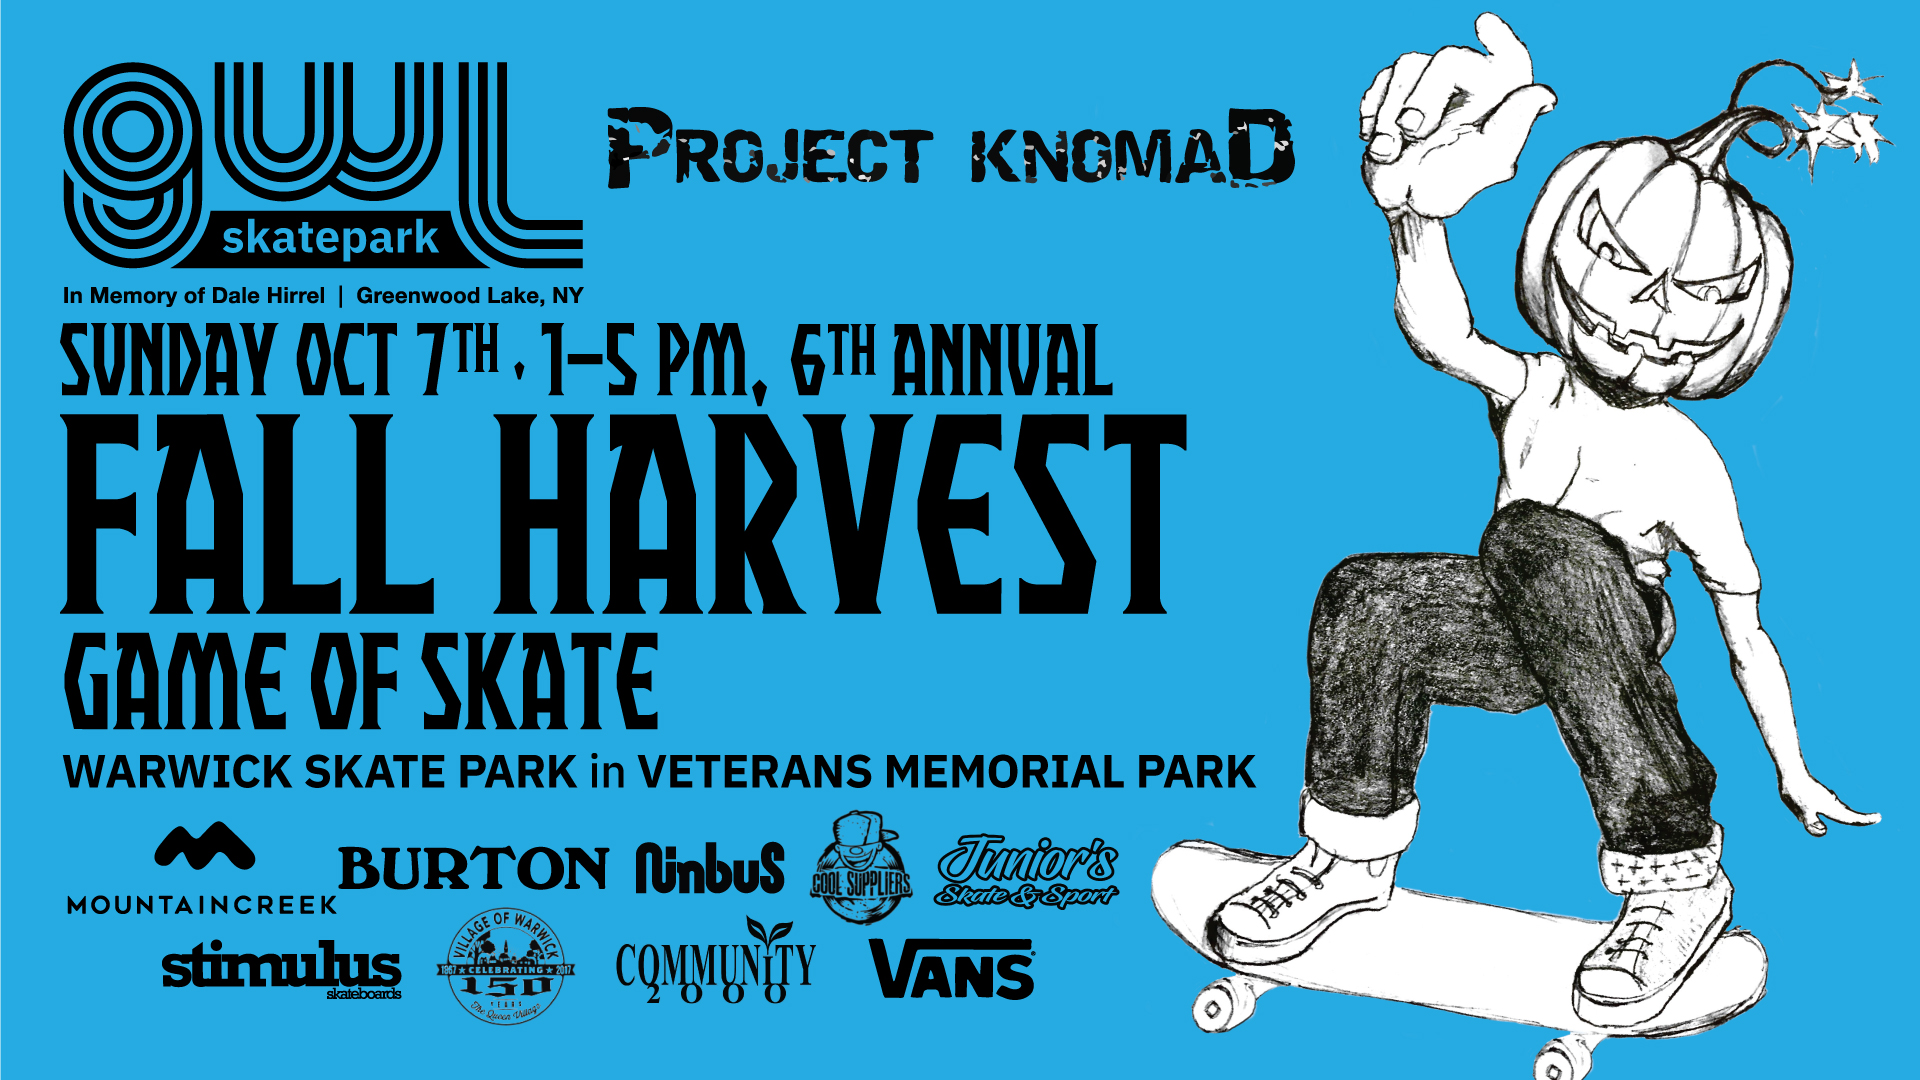 GWLSkatePark fundraising event, 6TH Annual Fall Harvest Game of Skate, Skate Contest, Veterans Memorial Park, Warwick Skate Park, Project Knomad, Warwick NY